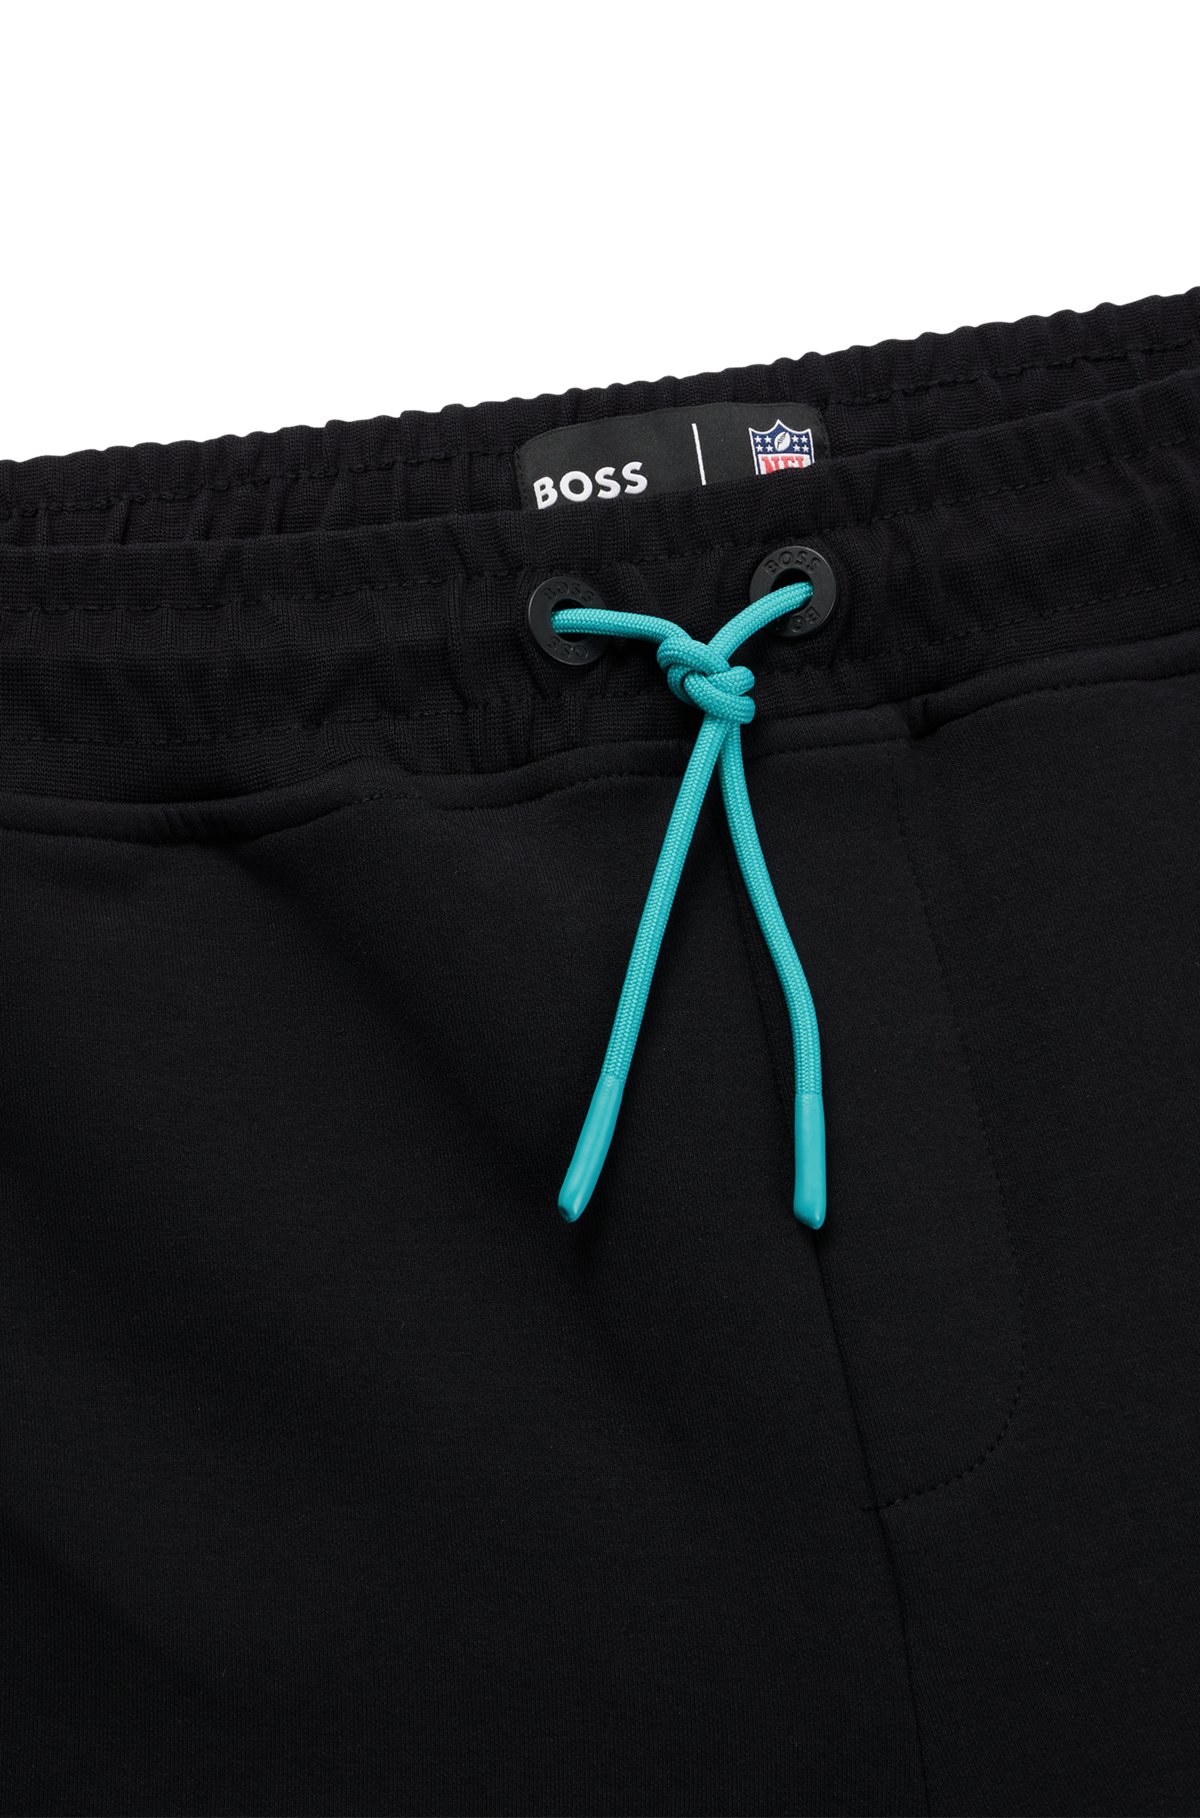 Pantalones de chándal BOSS x NFL de mezcla de algodón con detalle de la colaboración, Dolphins